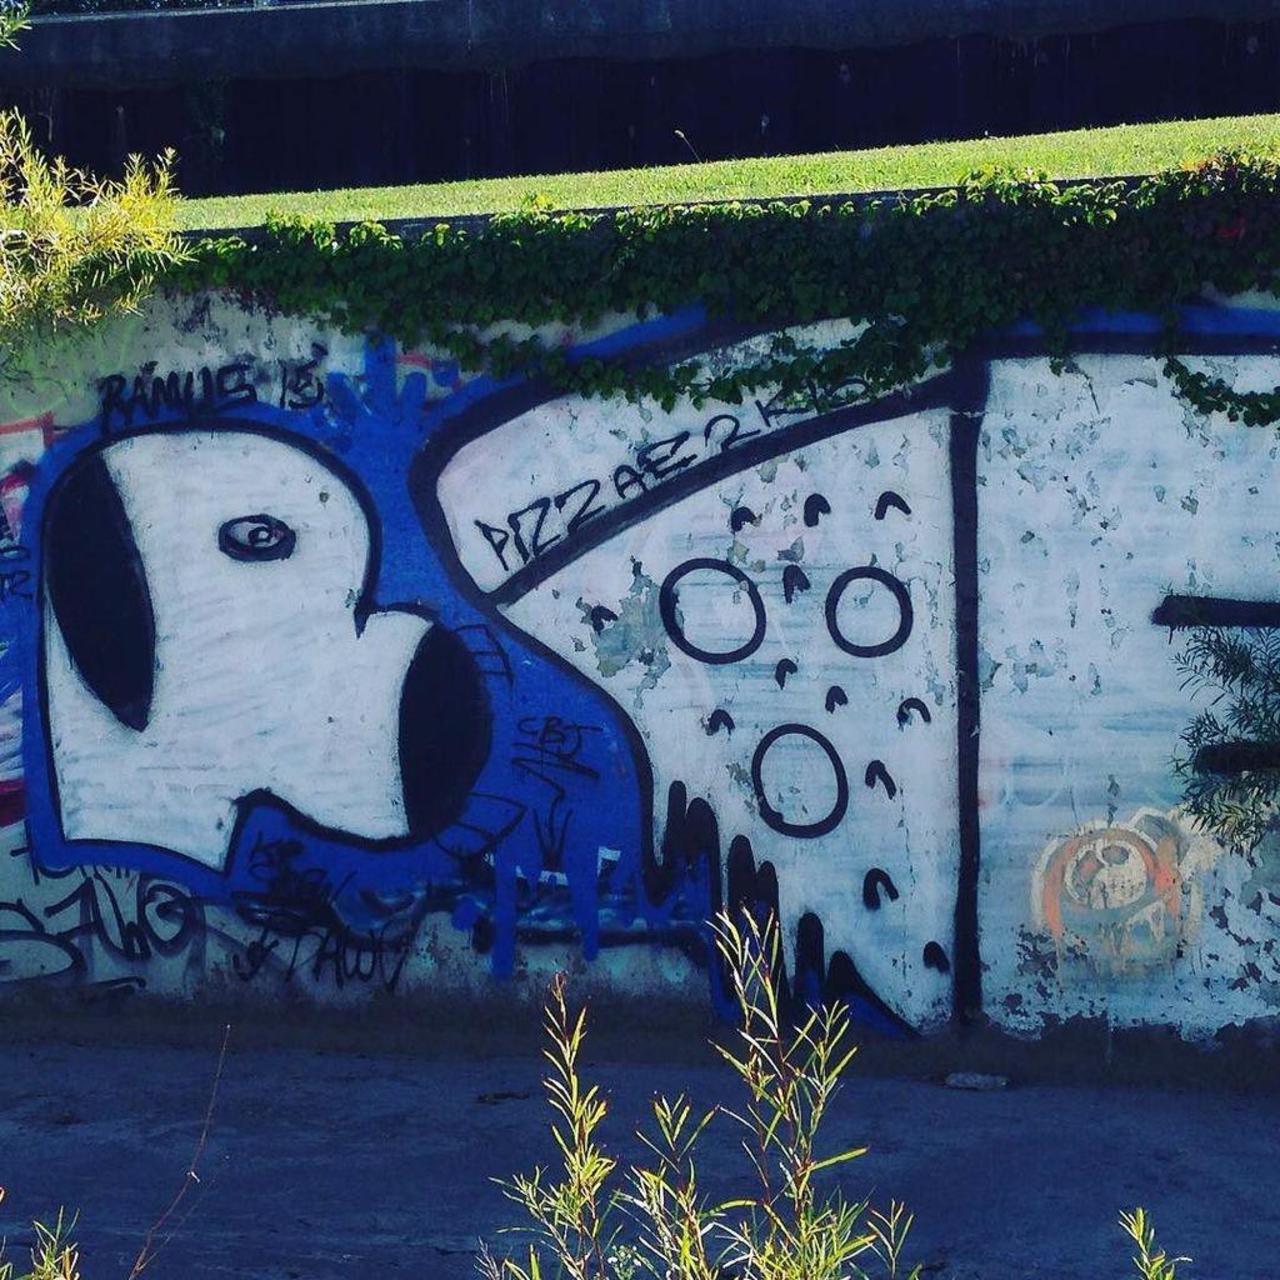 #graffitiporn #GraffitiArt #graffiti #streetart #tagging #spraypaint #spraycan #sprayart http://ift.tt/1h10Adc http://t.co/6anzdxVTh5